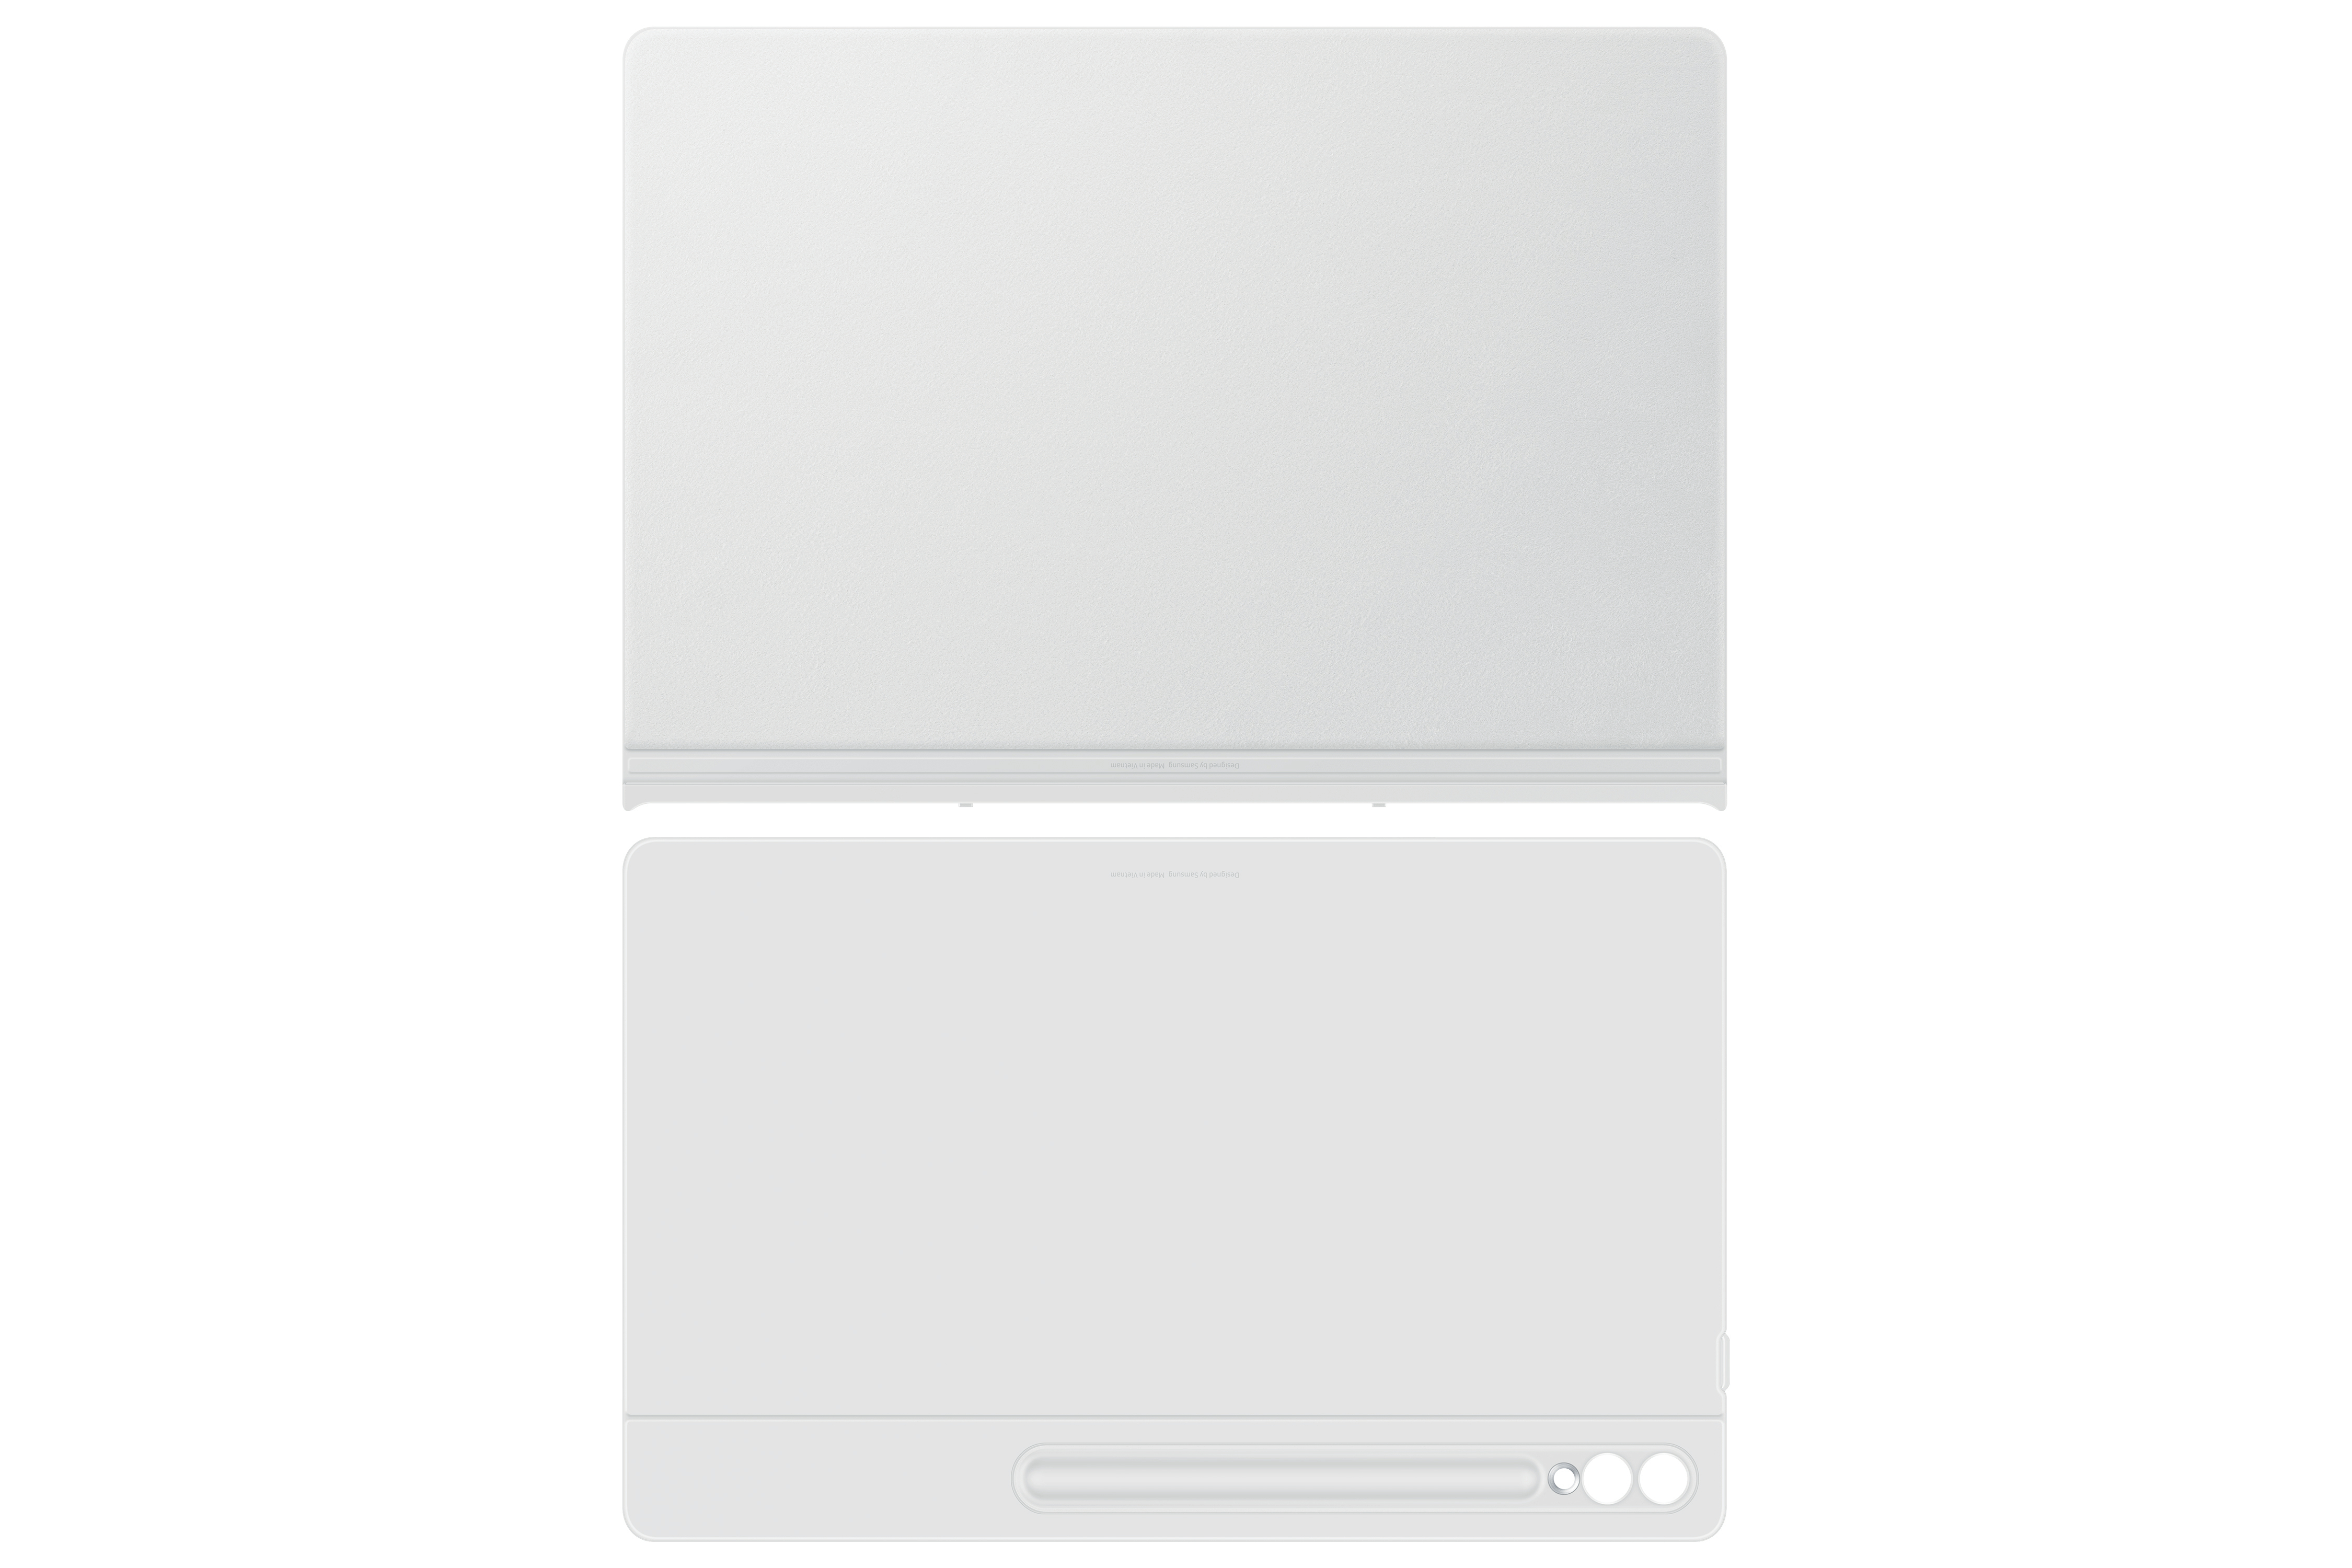 Ultra, Bookcover, EF-BX910, White SAMSUNG GalaxyTab Samsung, S9